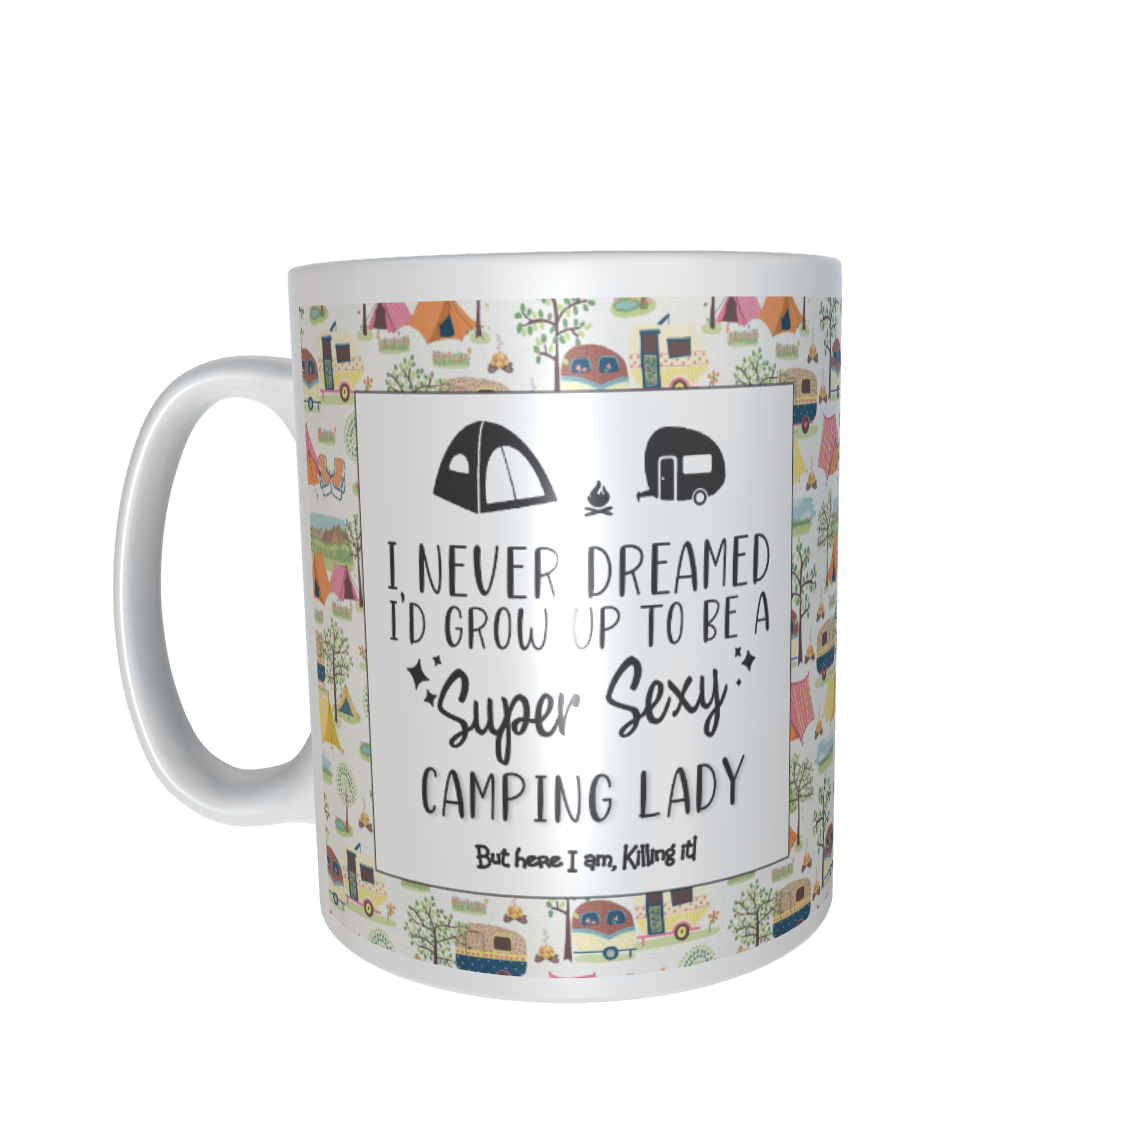 Super Sexy Camping Lady - 11oz porcelain mug